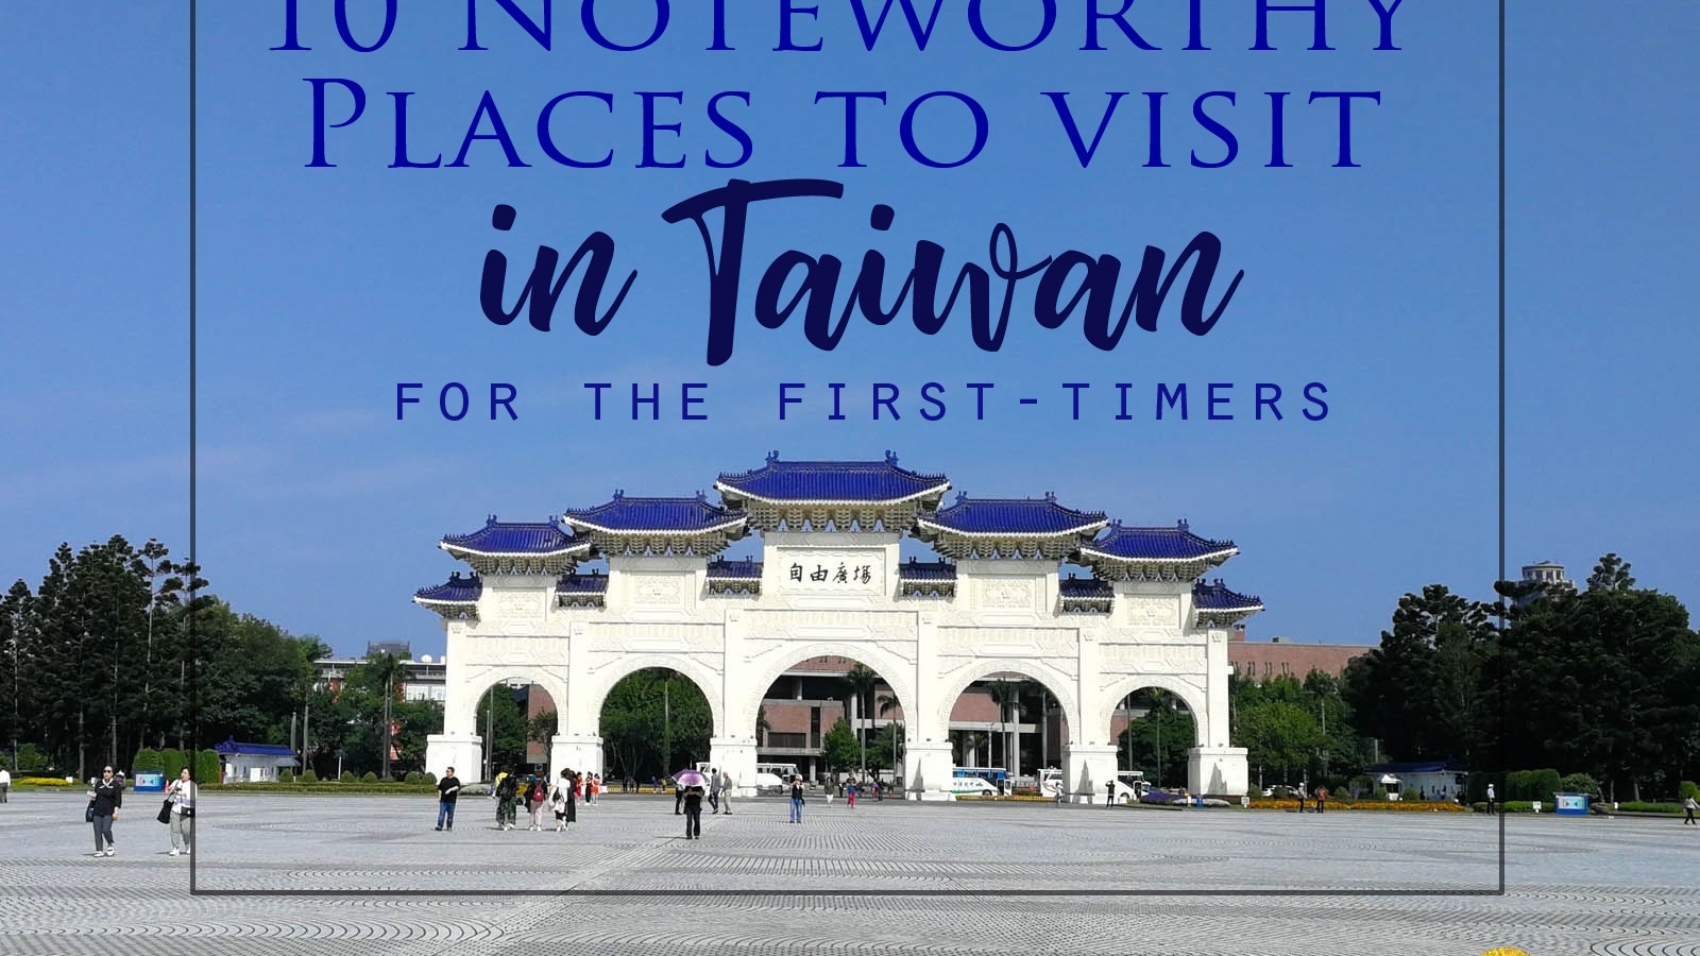 taiwan, travel, places to visit in taiwan, taiwan tourism, taiwan travel